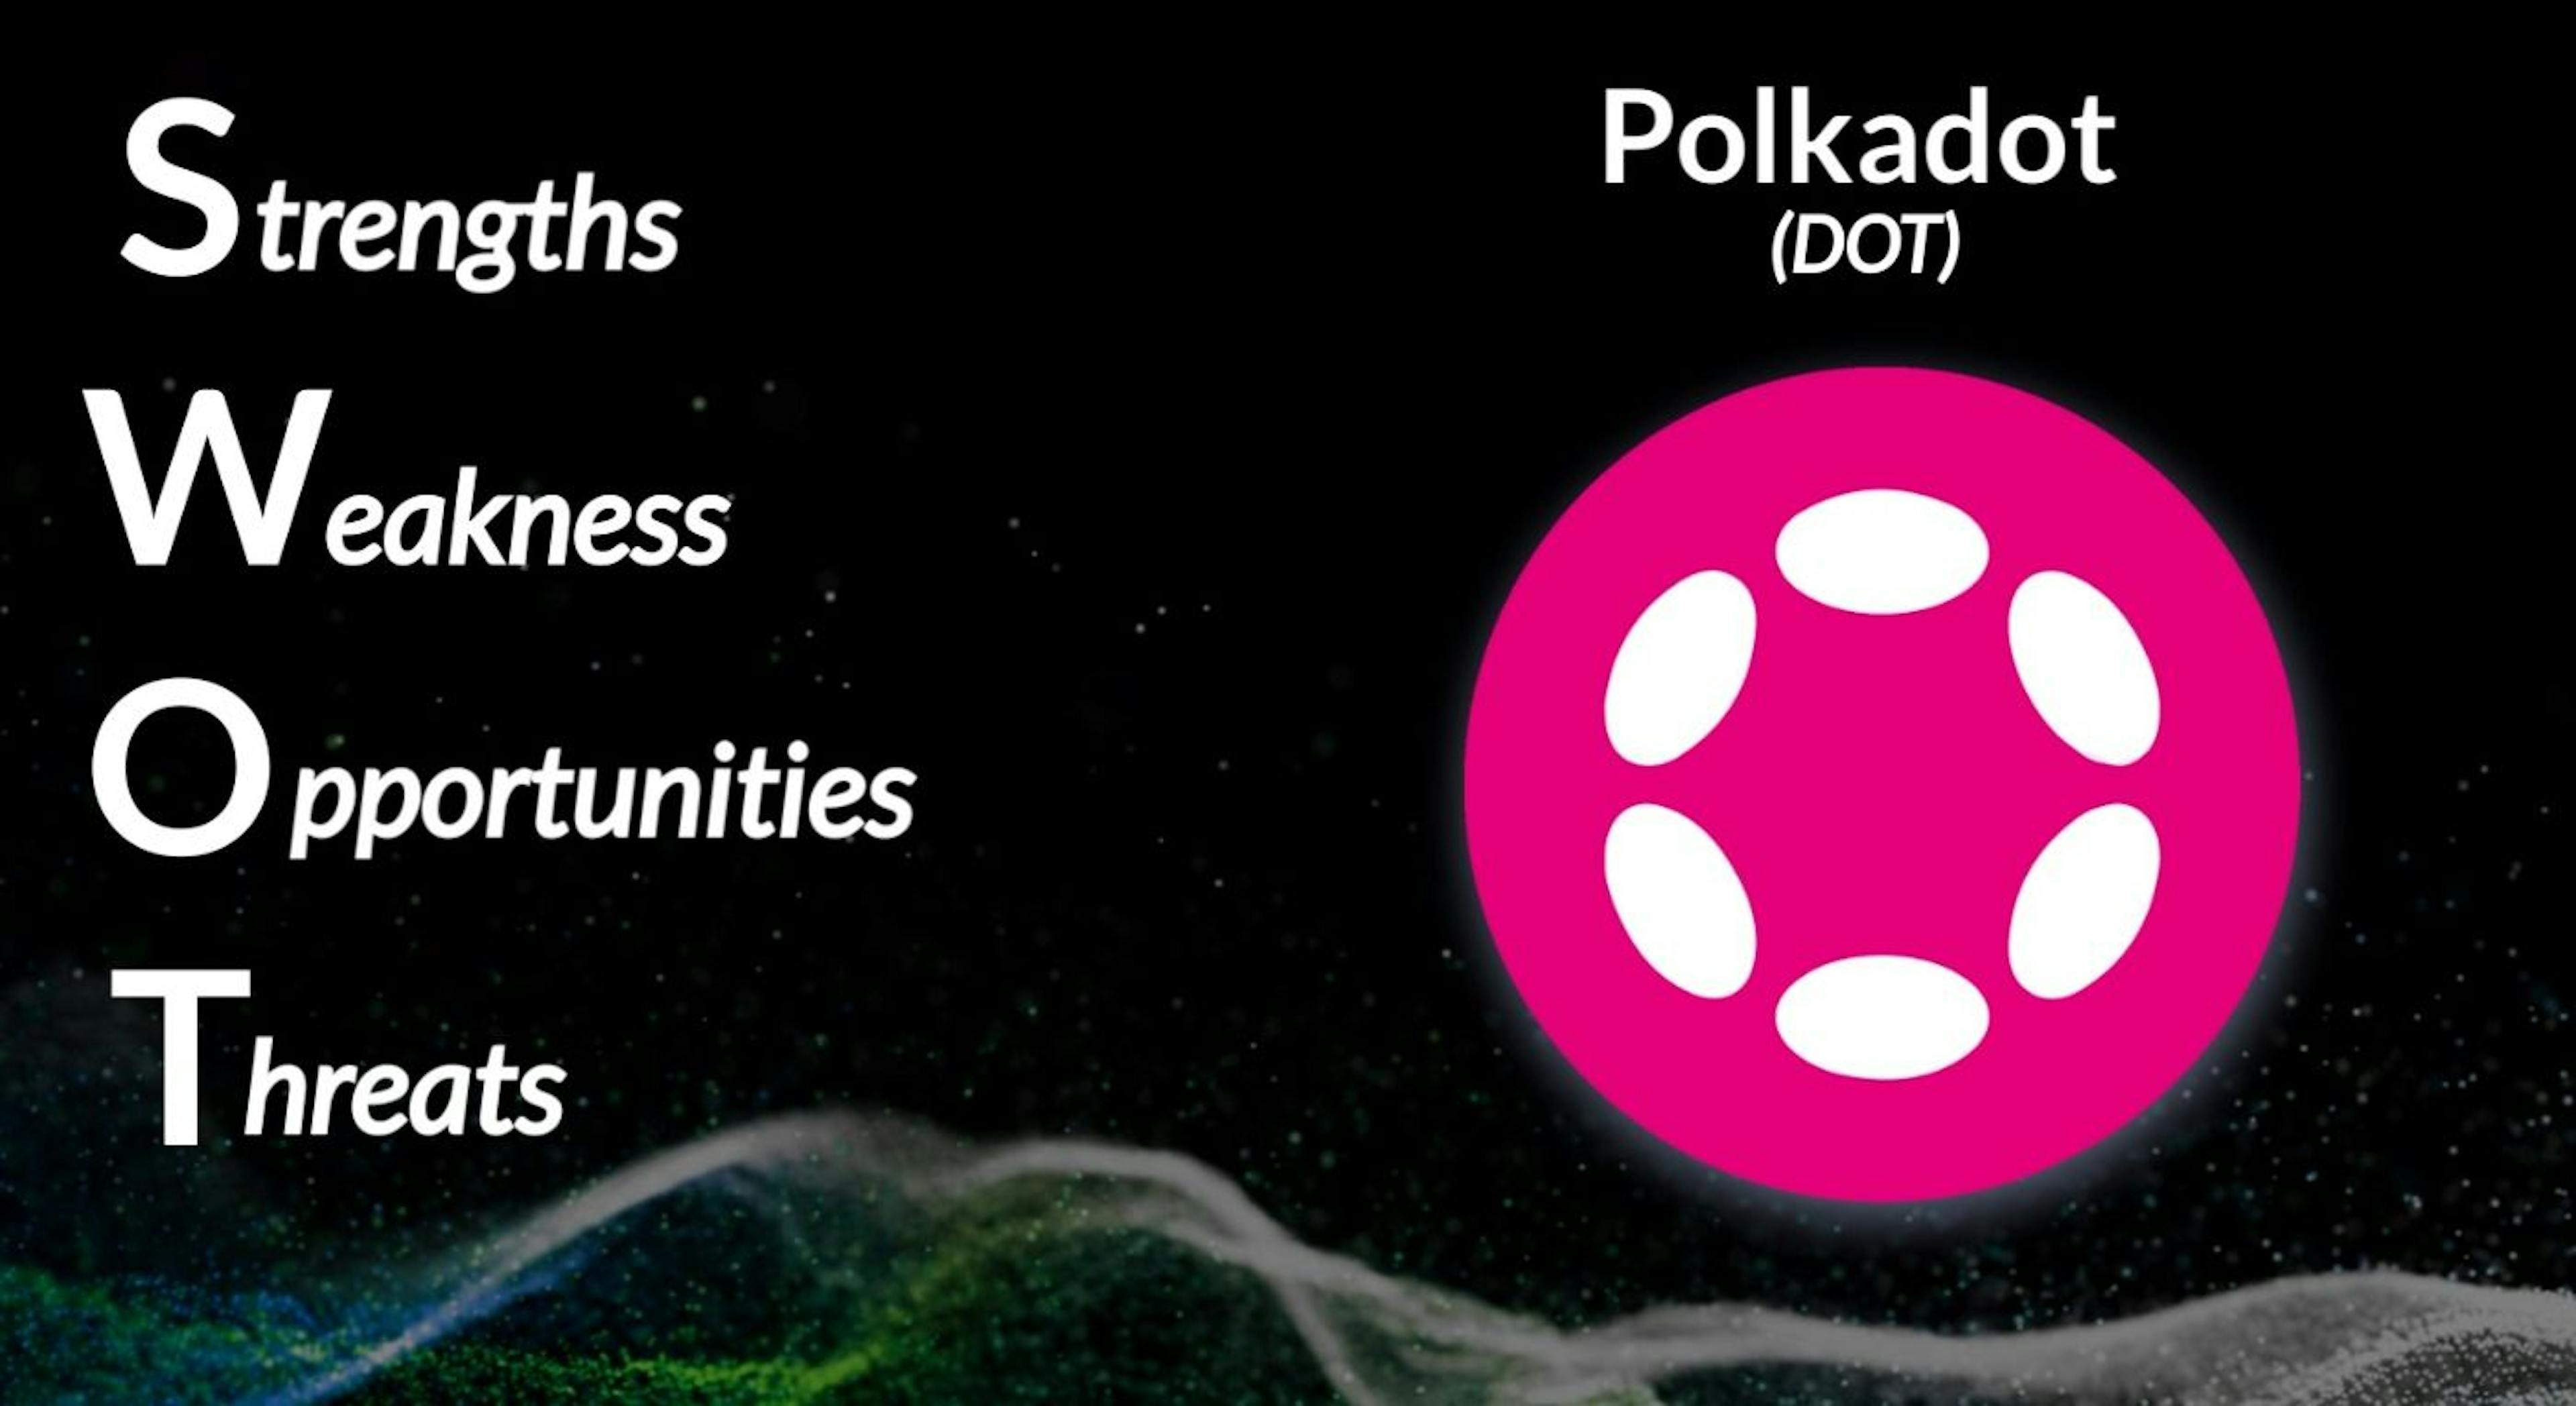 featured image - The Polkadot (DOT) SWOT Analysis